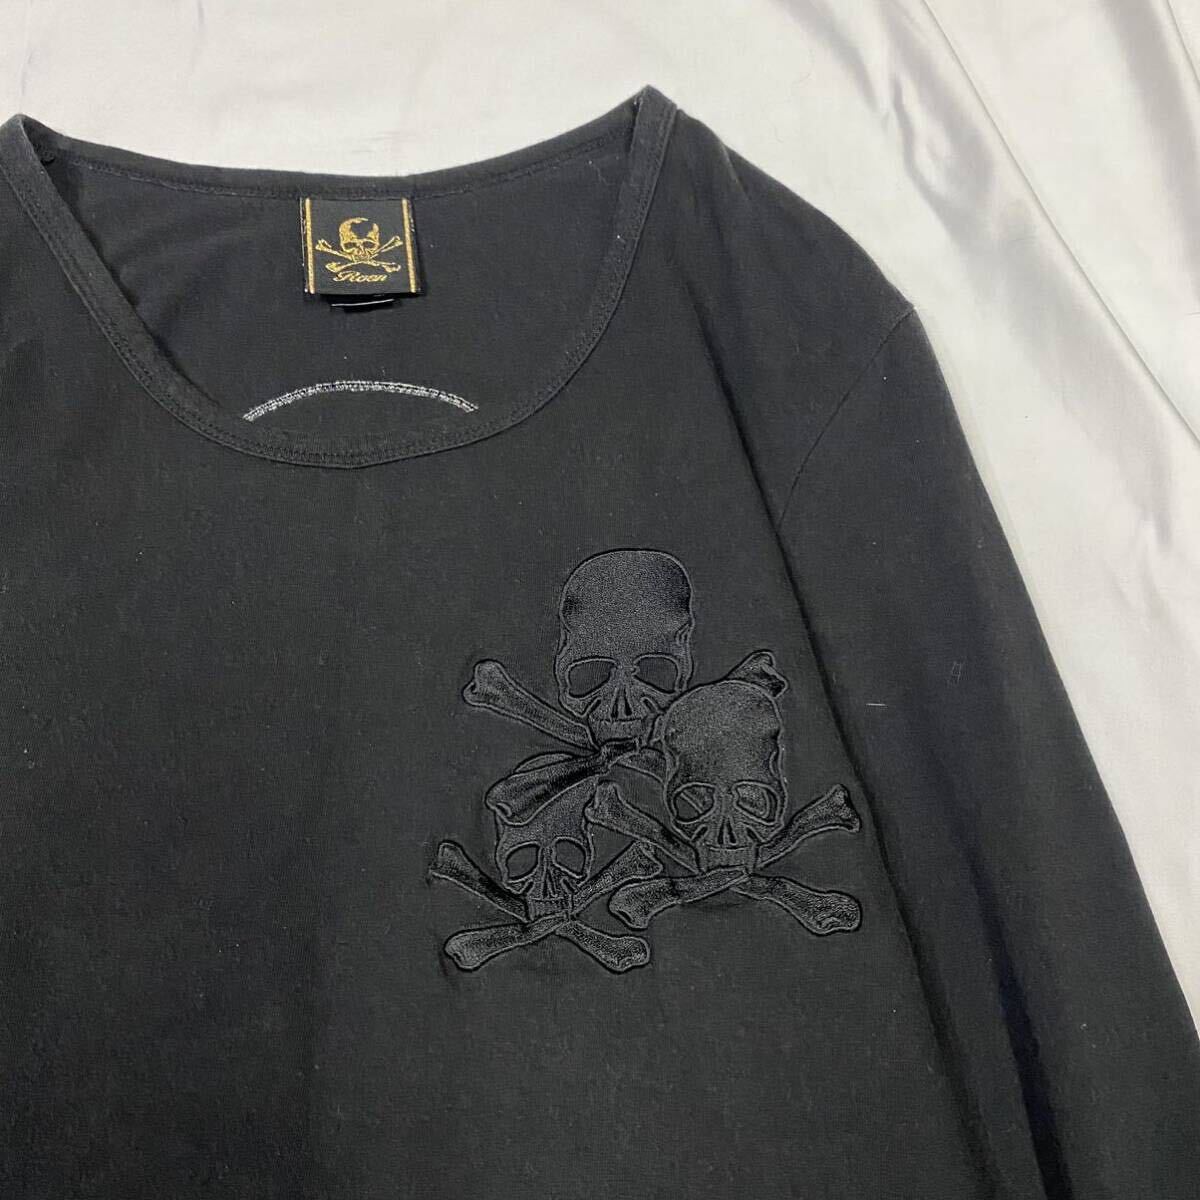 Rare 00\'s Roen Leopard Skull T-shirt JAPANESE LABEL archive goa ifsixwasnine kmrii share spirit lgb 14th addiction